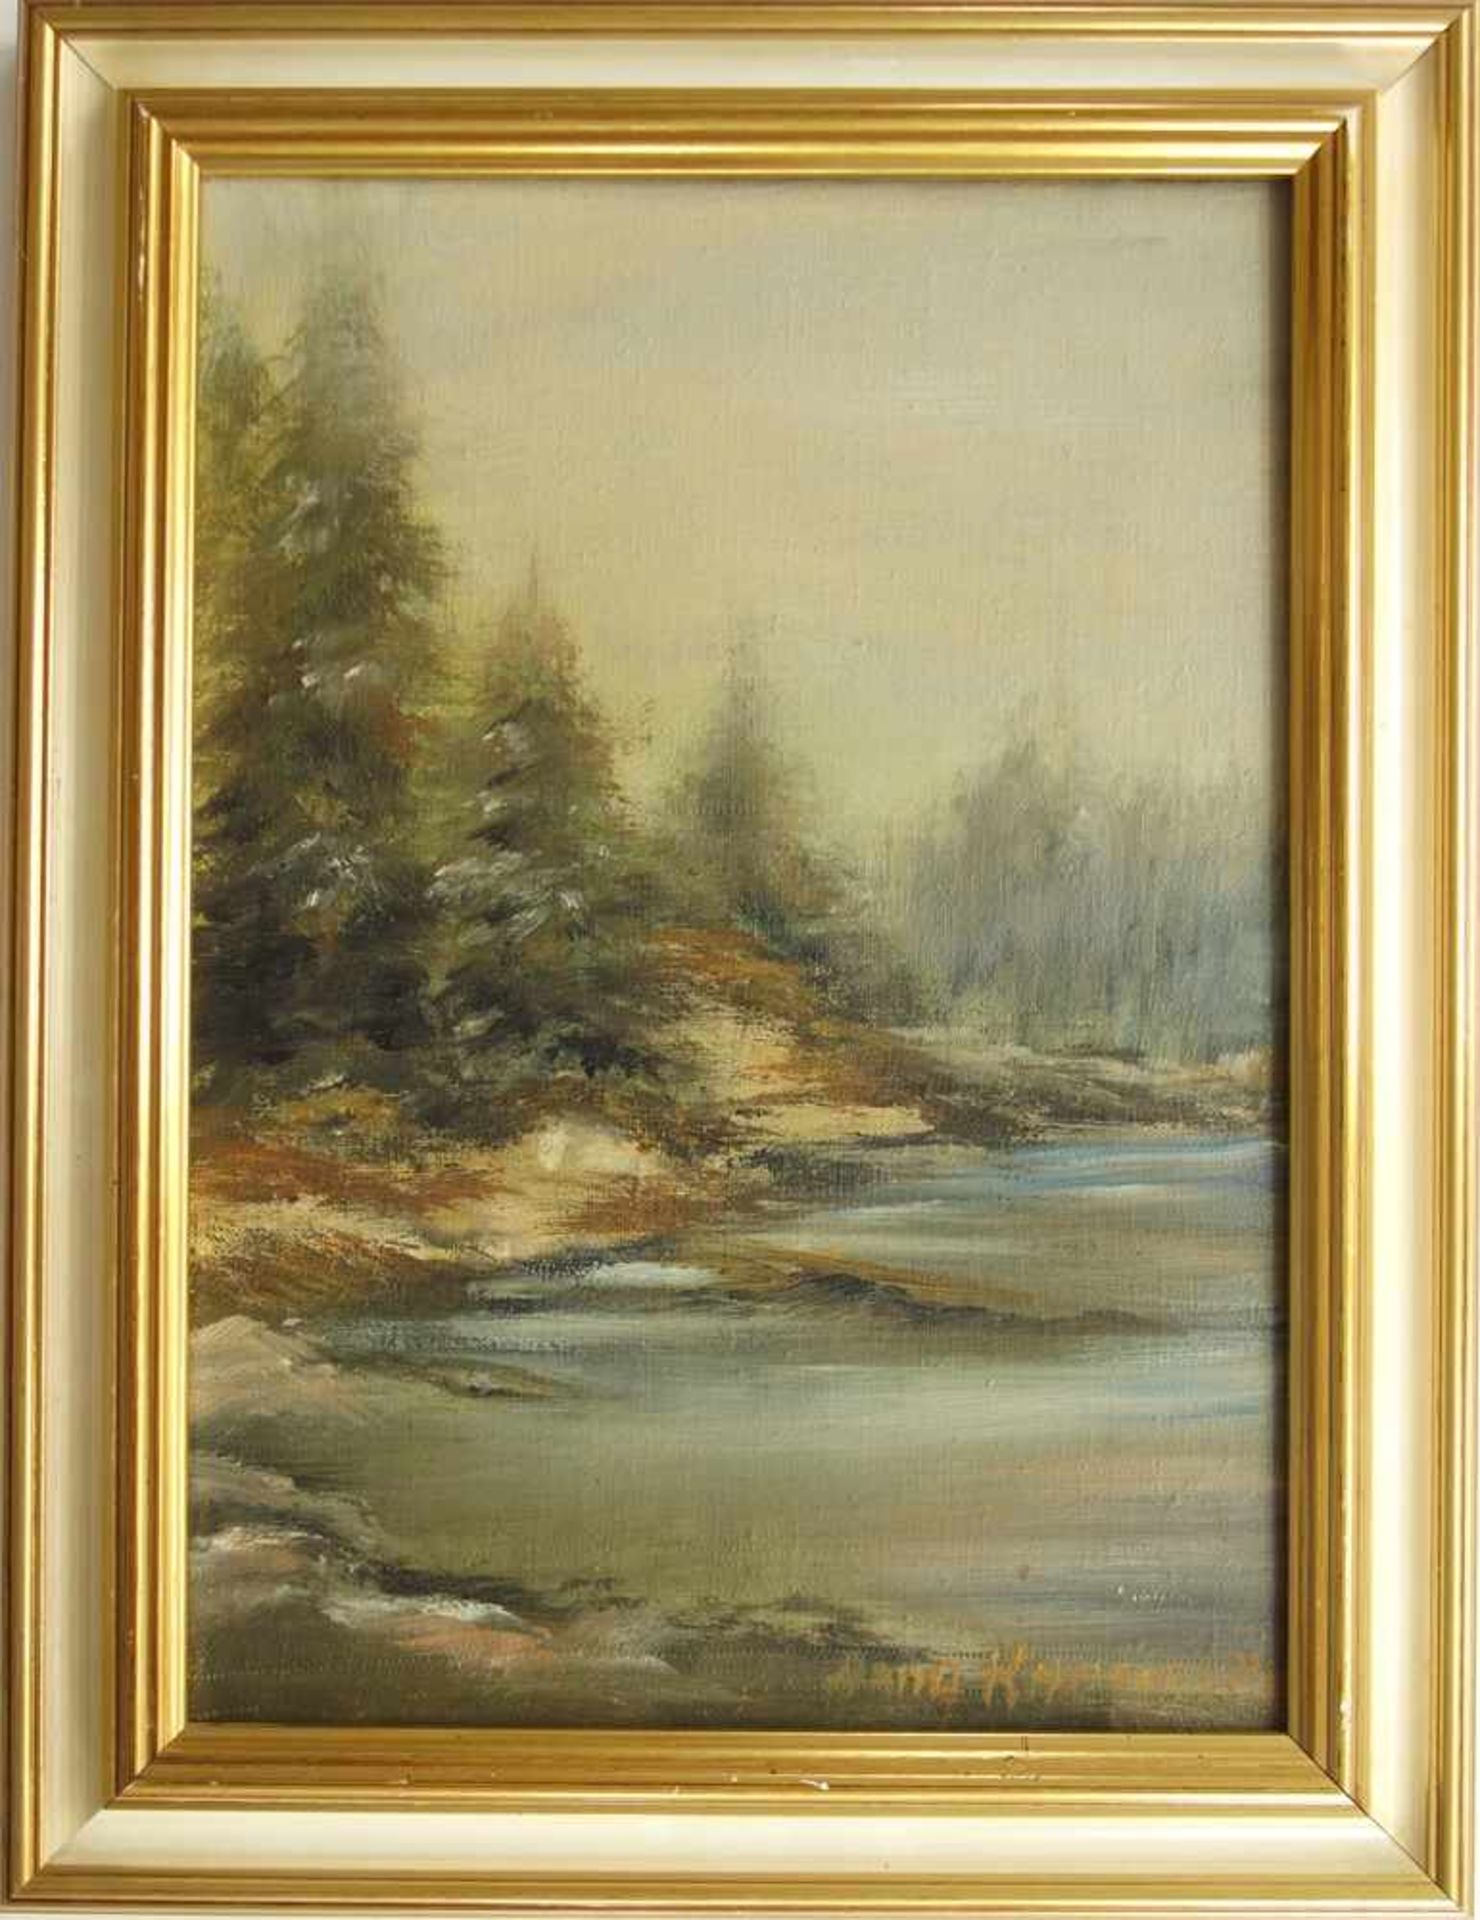 Anna Kaminsky "Ufer mit Nadelbäumen", 20. Jh., Öl/Lw., u.r. signiert, HB 34*24,5cm, gerahmt,